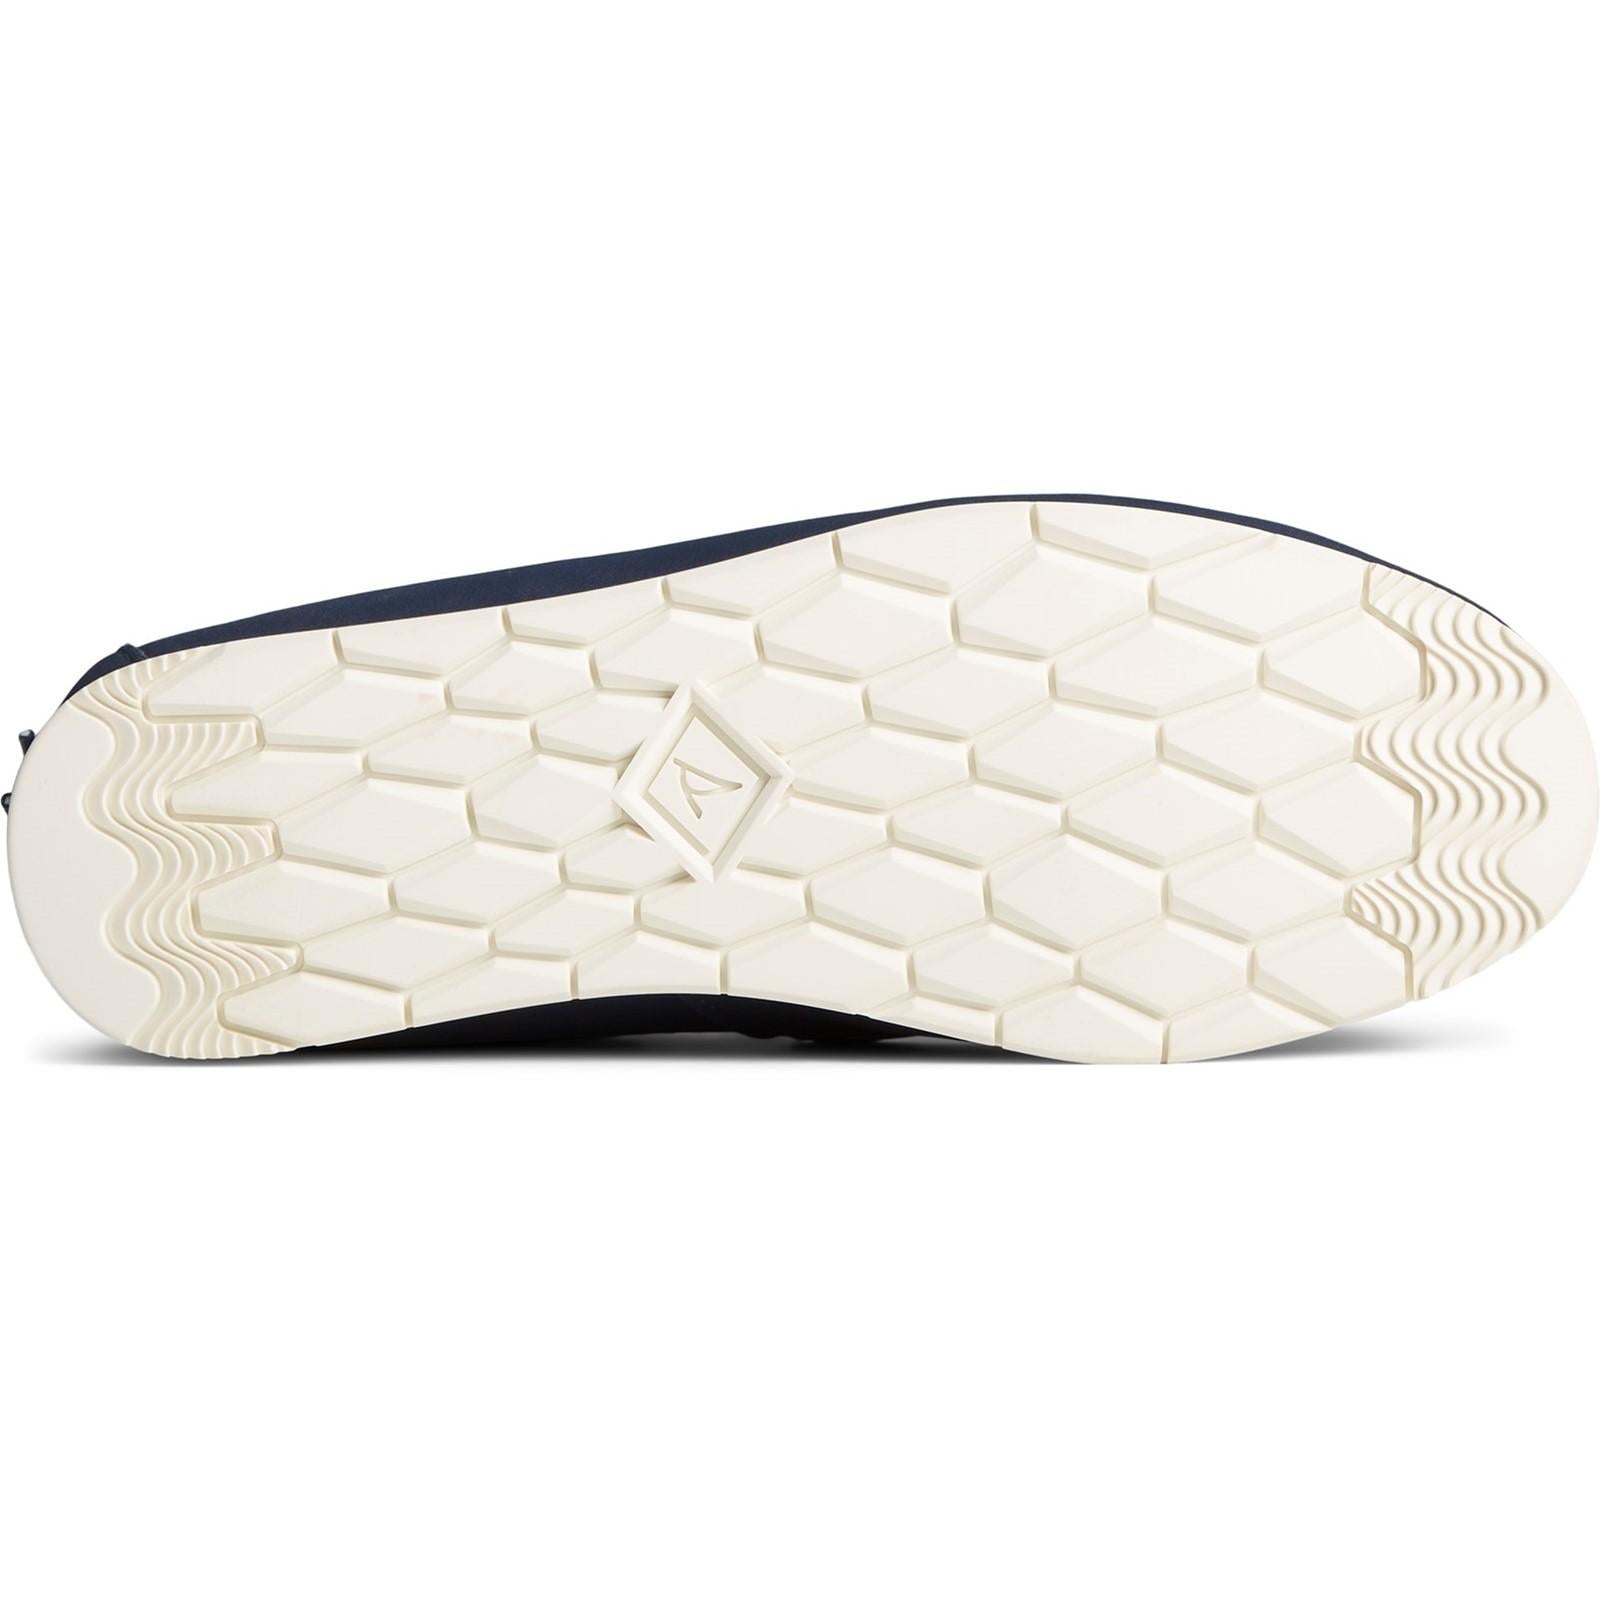 Sperry Top-sider Moc-Sider Nylon Slip On Shoes